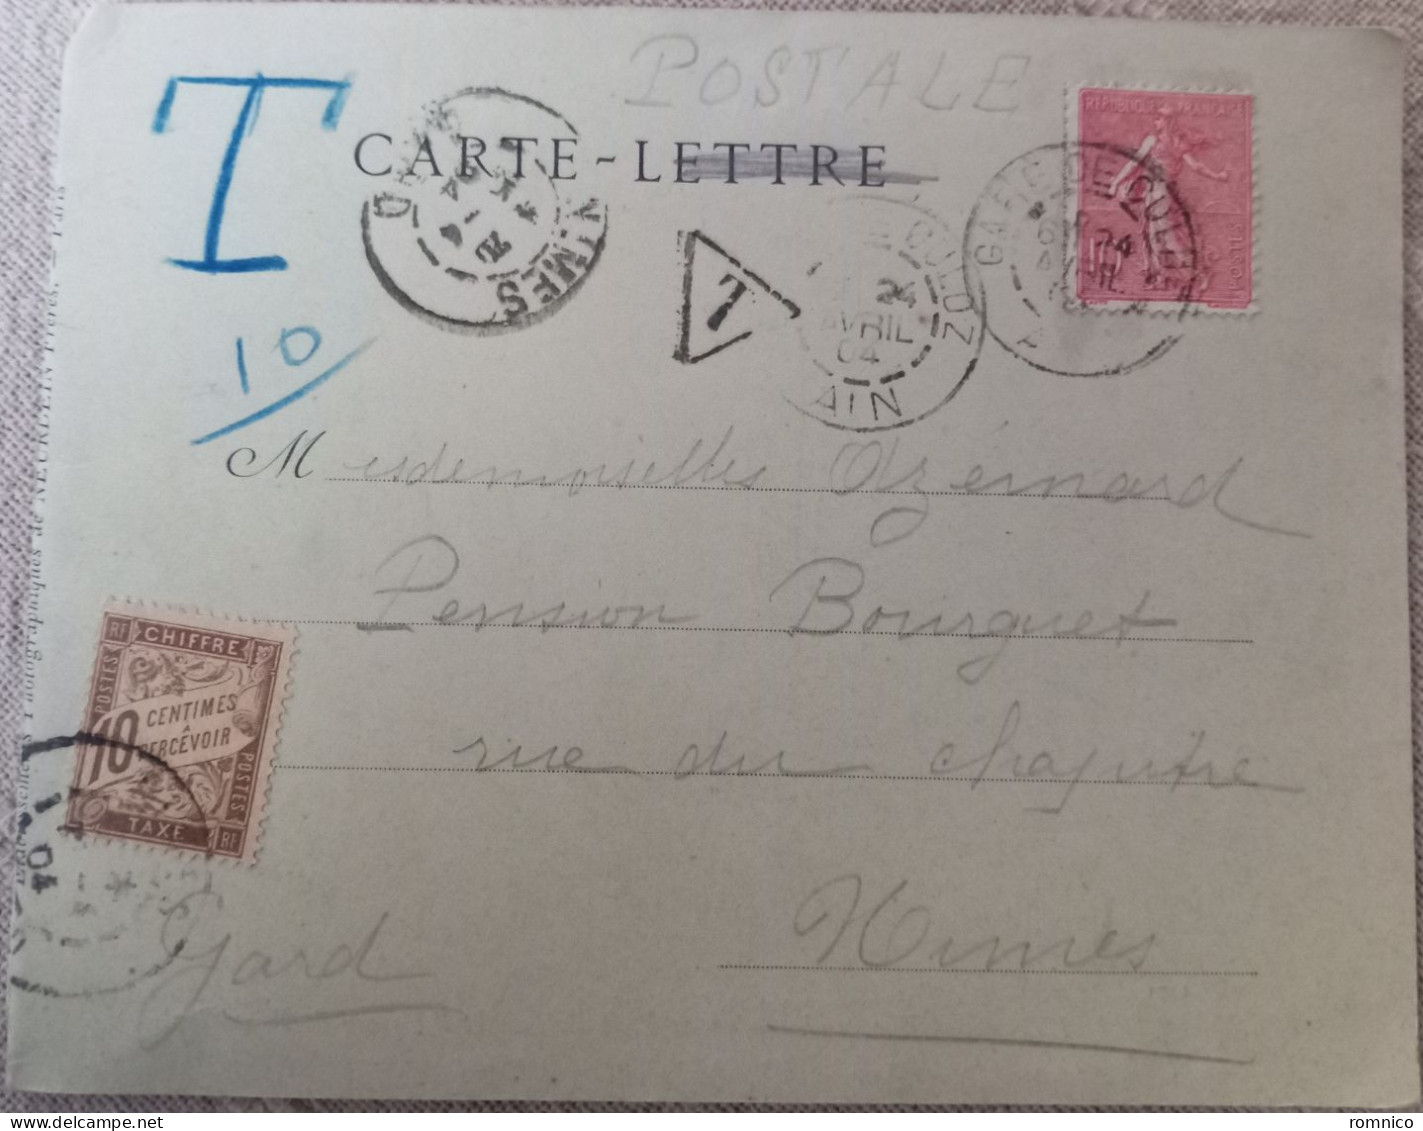 Carte Postale Double Taxe 10 C - 1859-1959 Covers & Documents